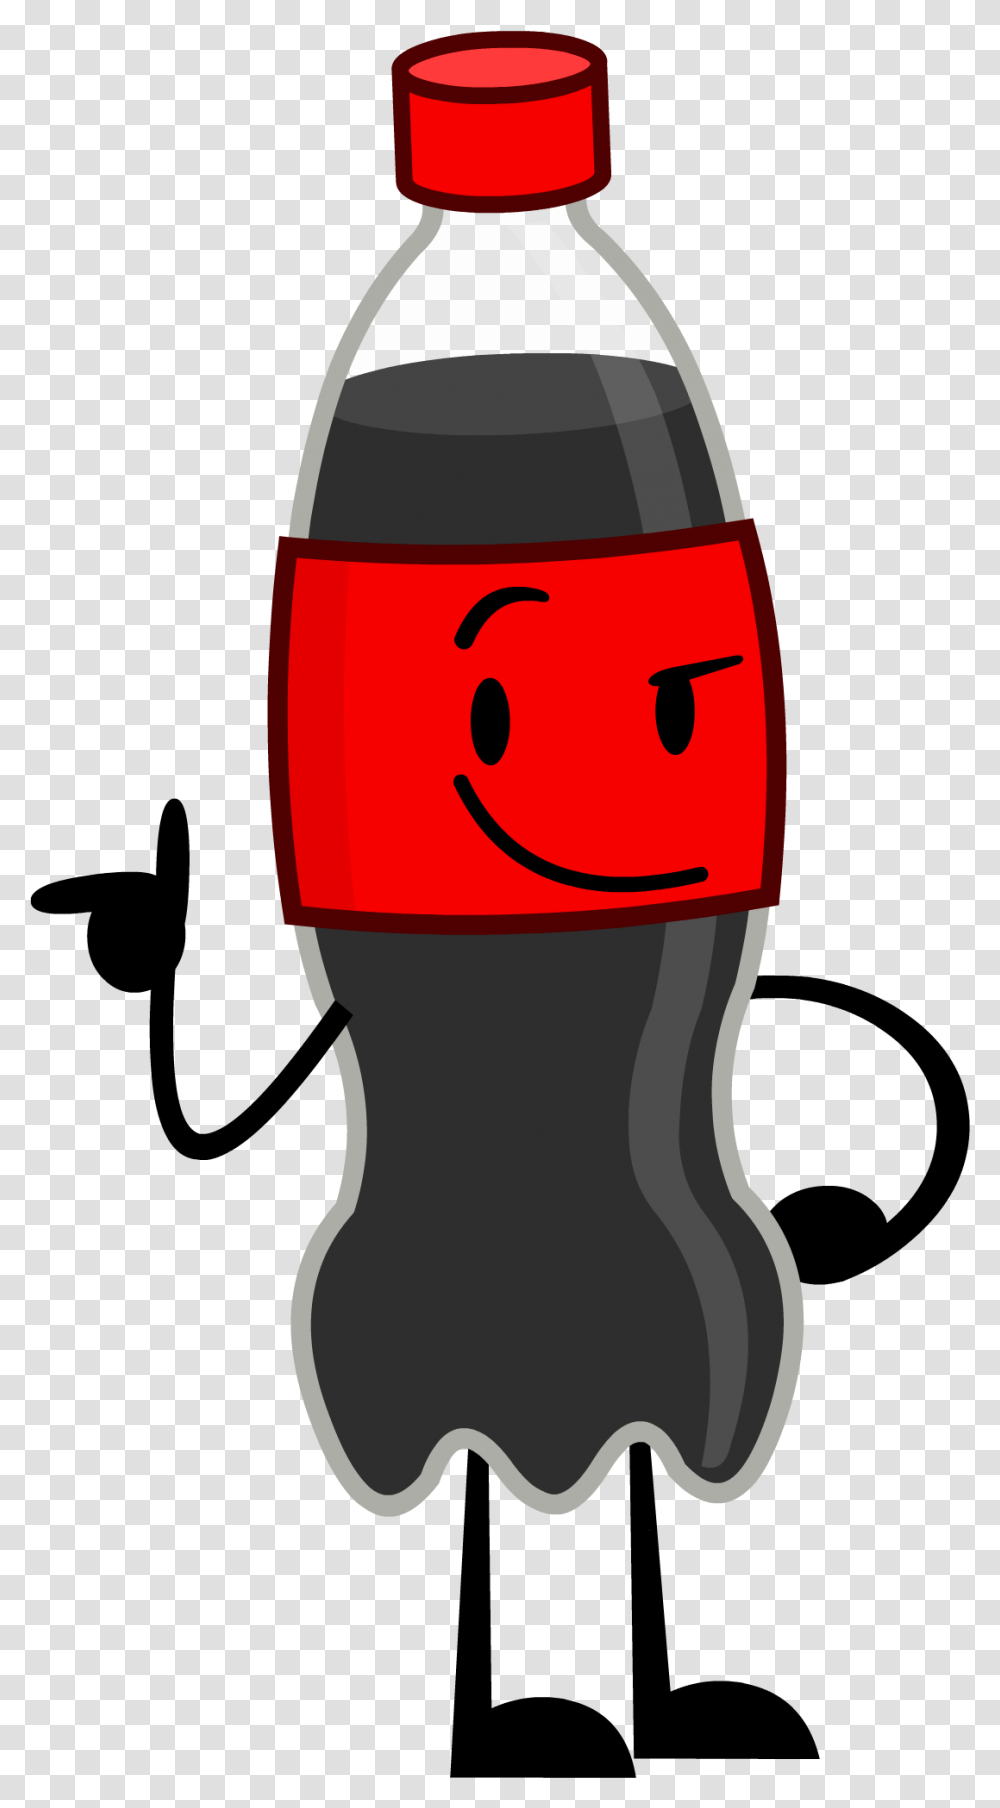 Clipcookdiarynet Water Bottle Clipart Coke Bottle 2 Cartoon Coca Cola Bottle, Beverage, Drink, Alcohol, Glass Transparent Png